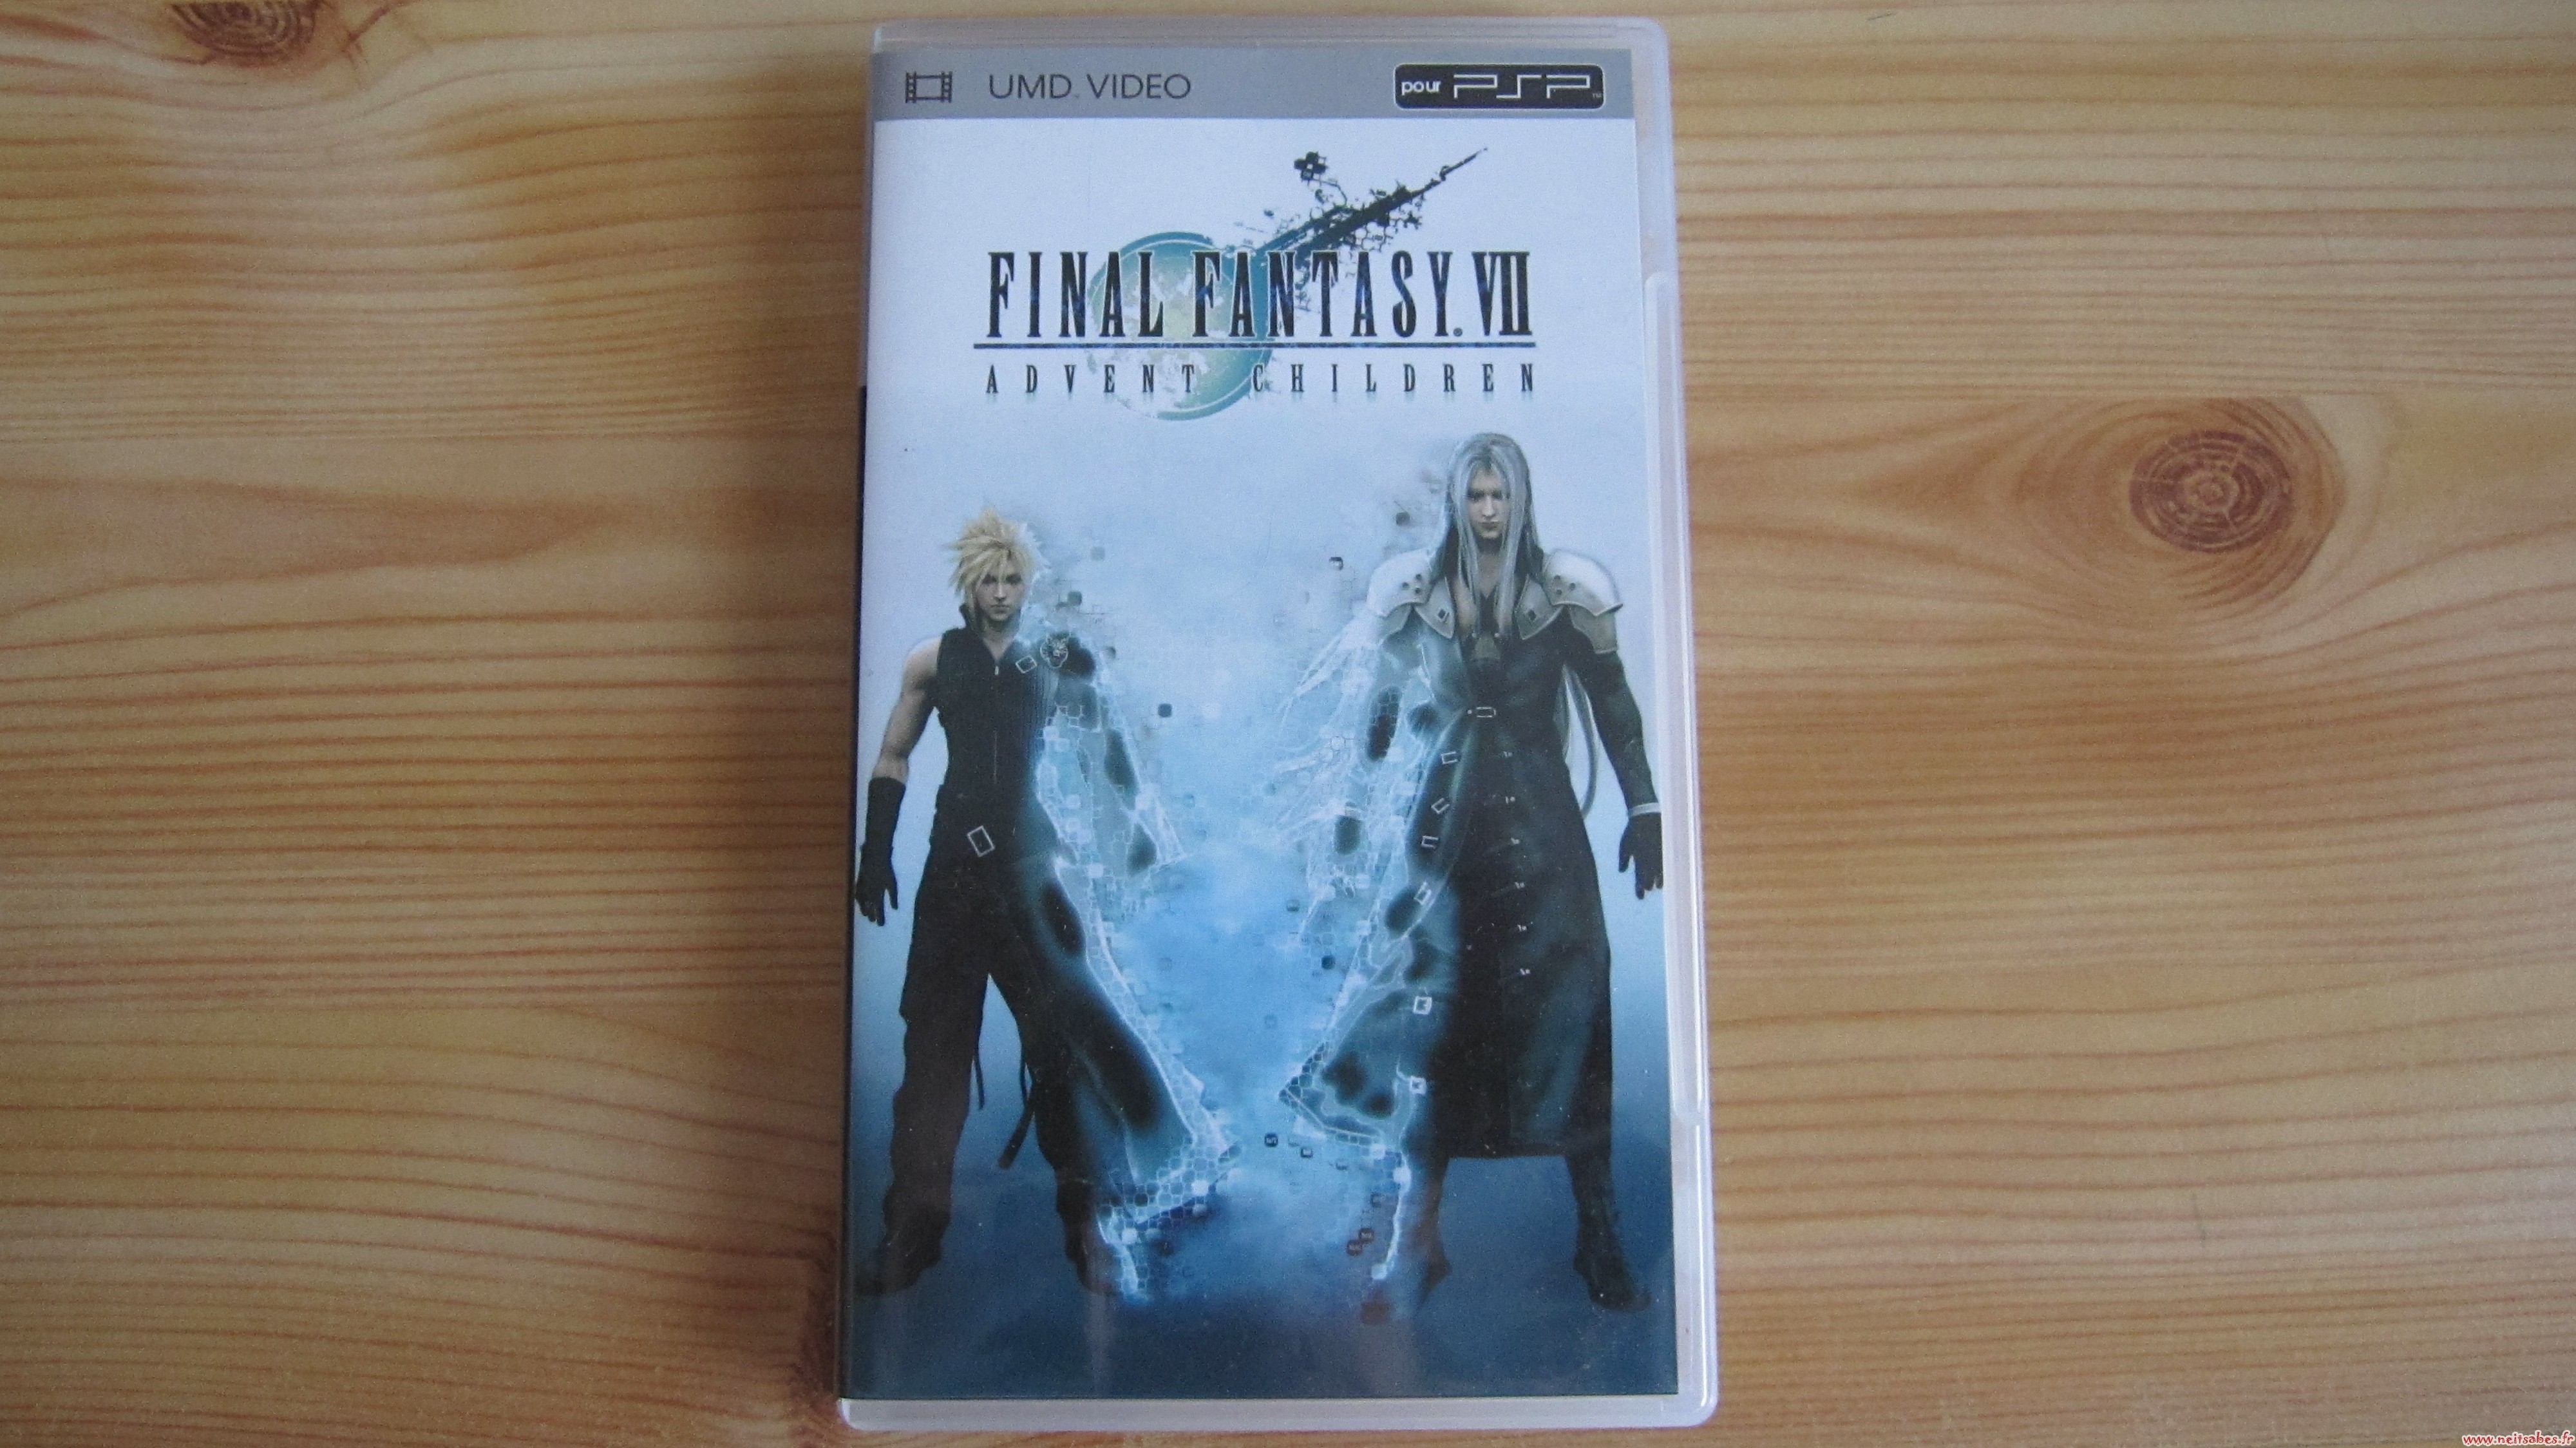 Concours #2 - Gagnez un UMD Final Fantasy VII - Advent Children